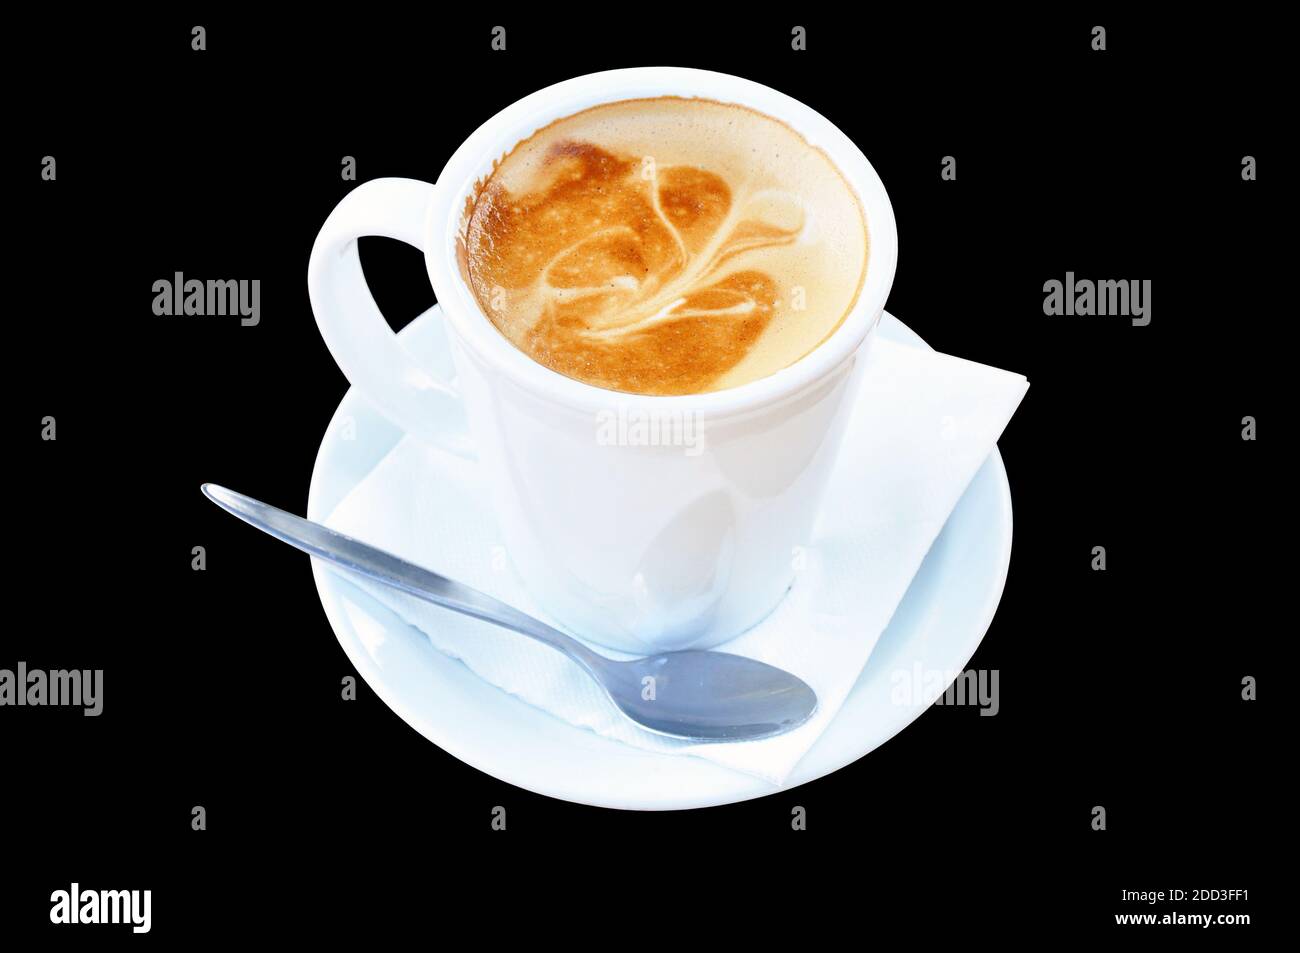 Café con leche en la taza - aislado sobre fondo negro Foto de stock